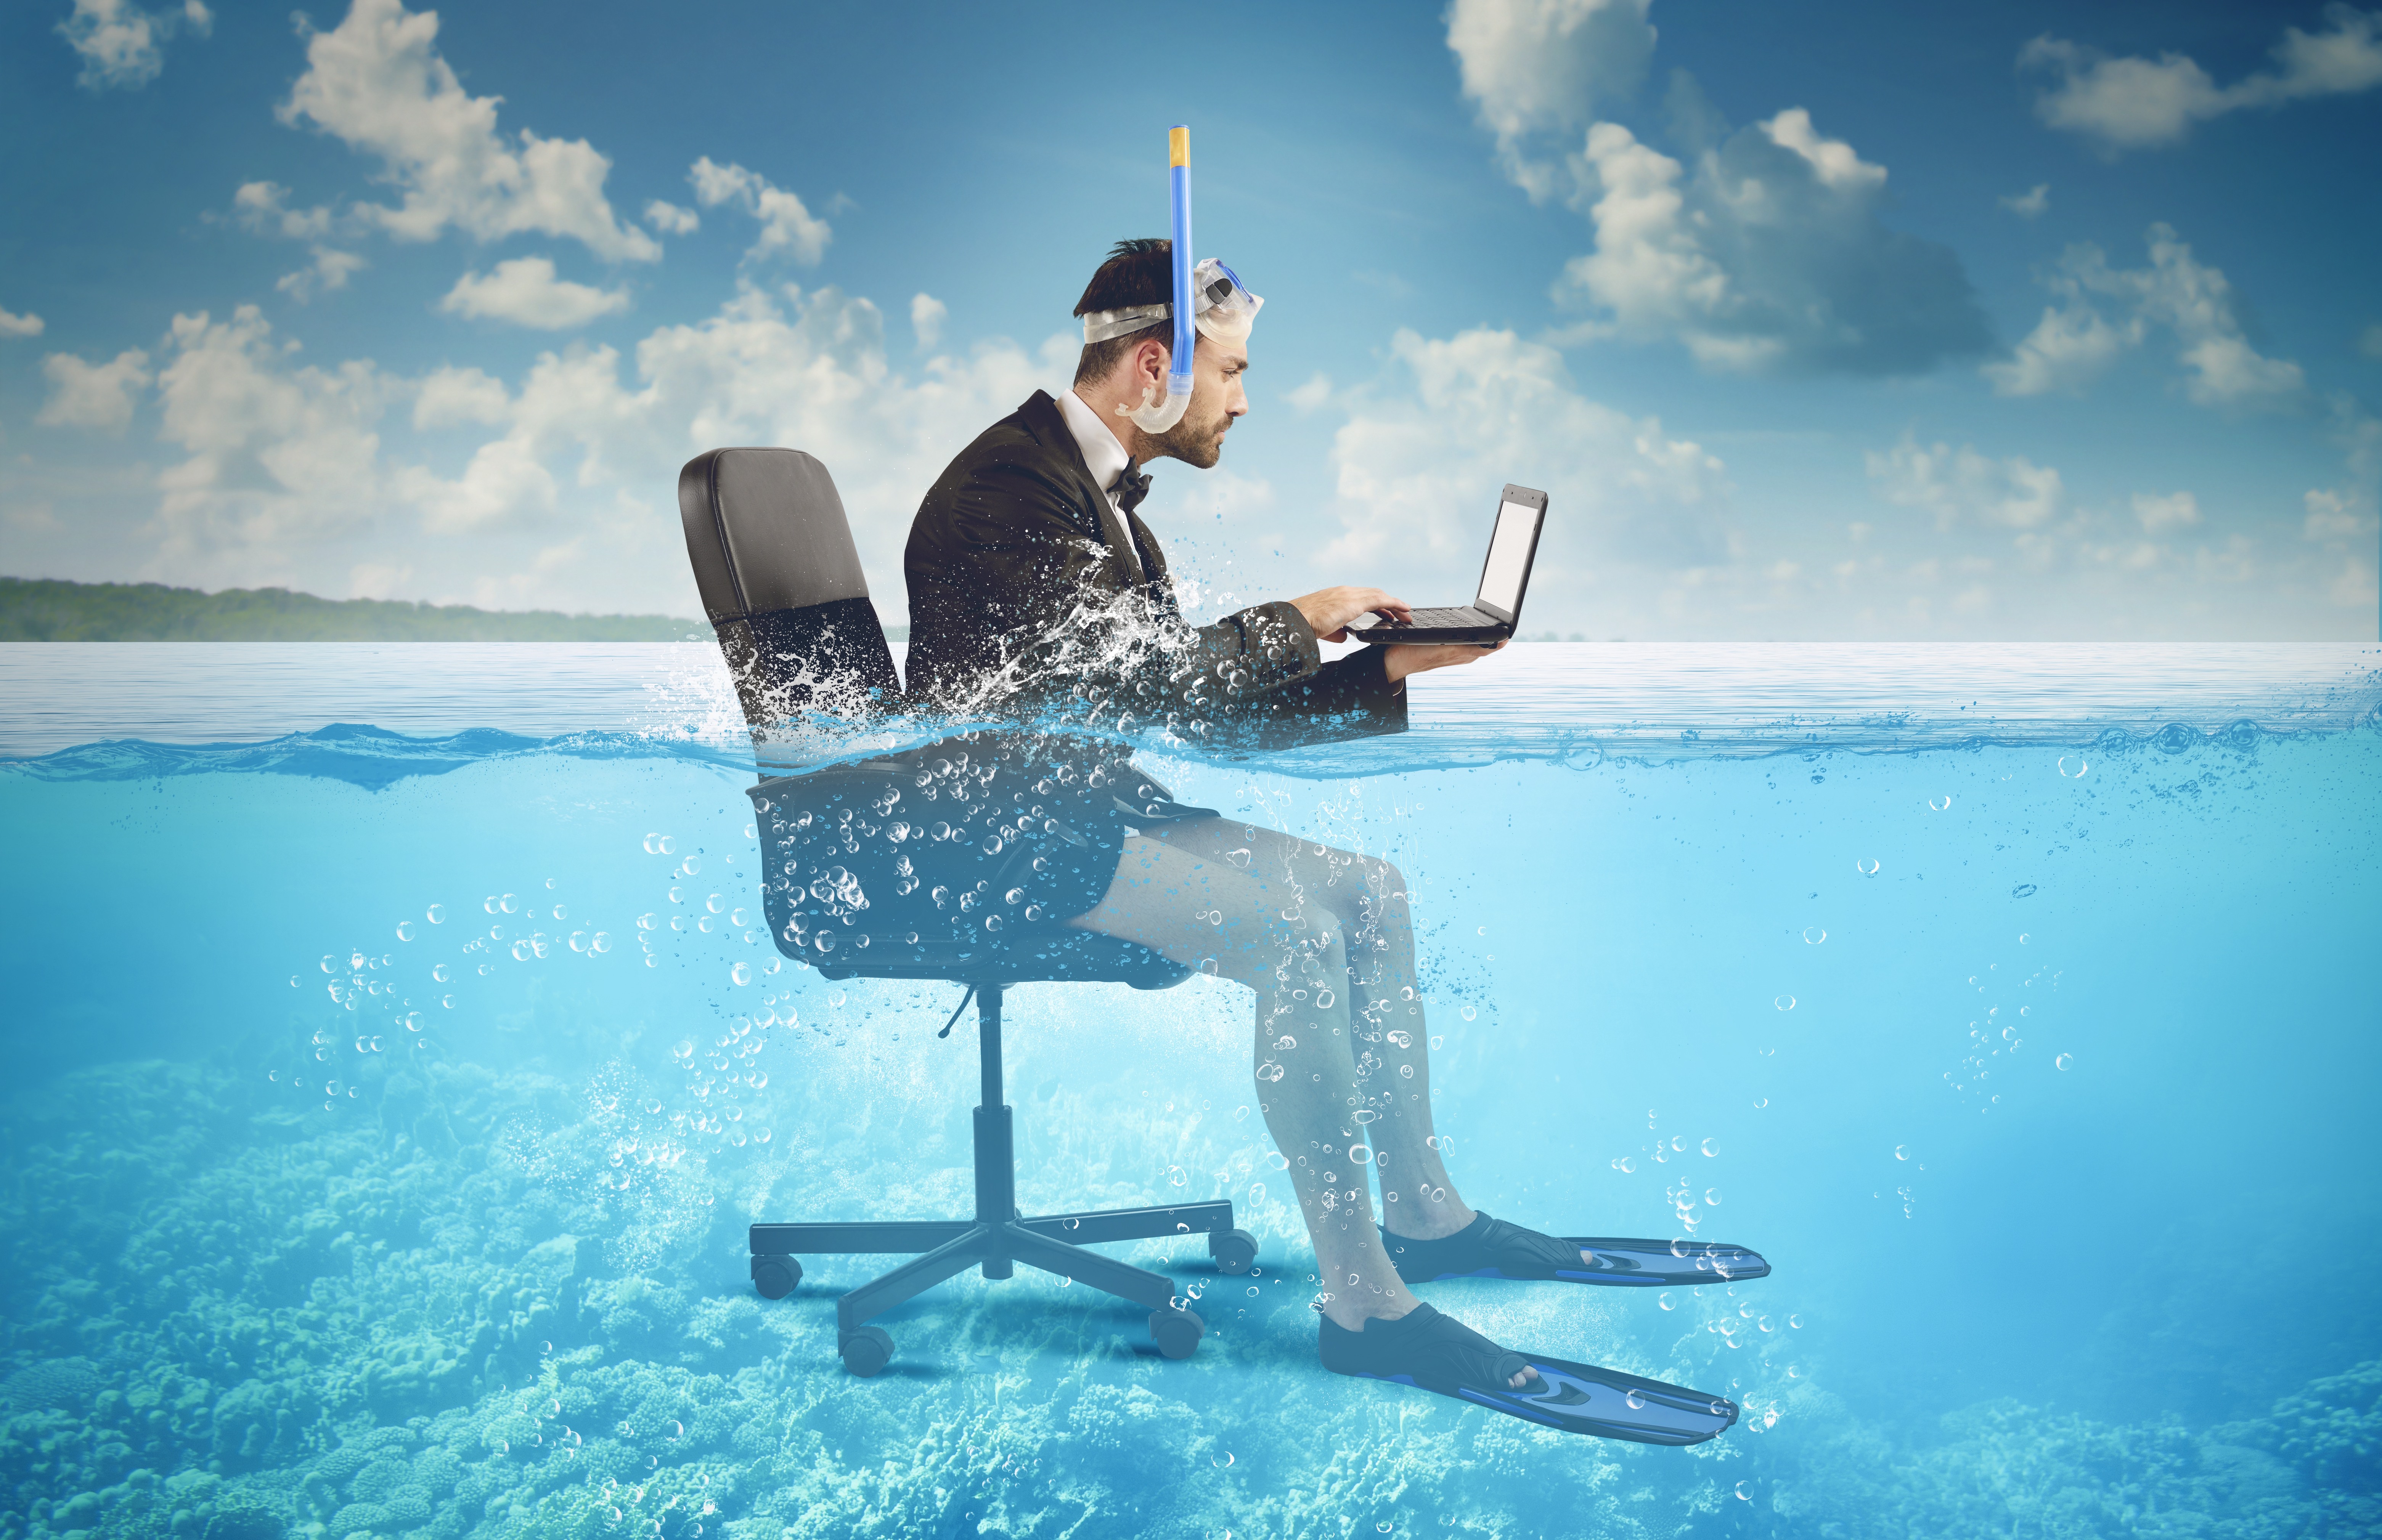 В данное время отдыхаем. Бизнесмен на море. Человек с ноутбуком на море. Люди на отдыхе. Человек с ноутбуком на пляже.